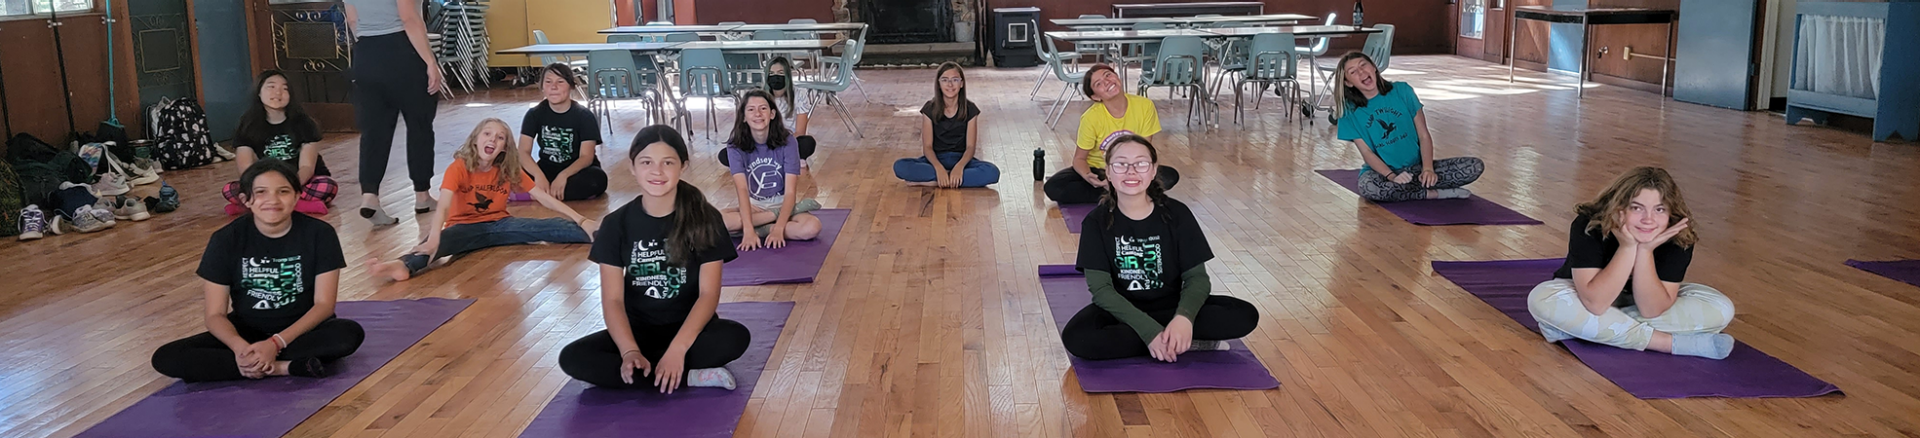  girls smiling sitting on yoga mats 